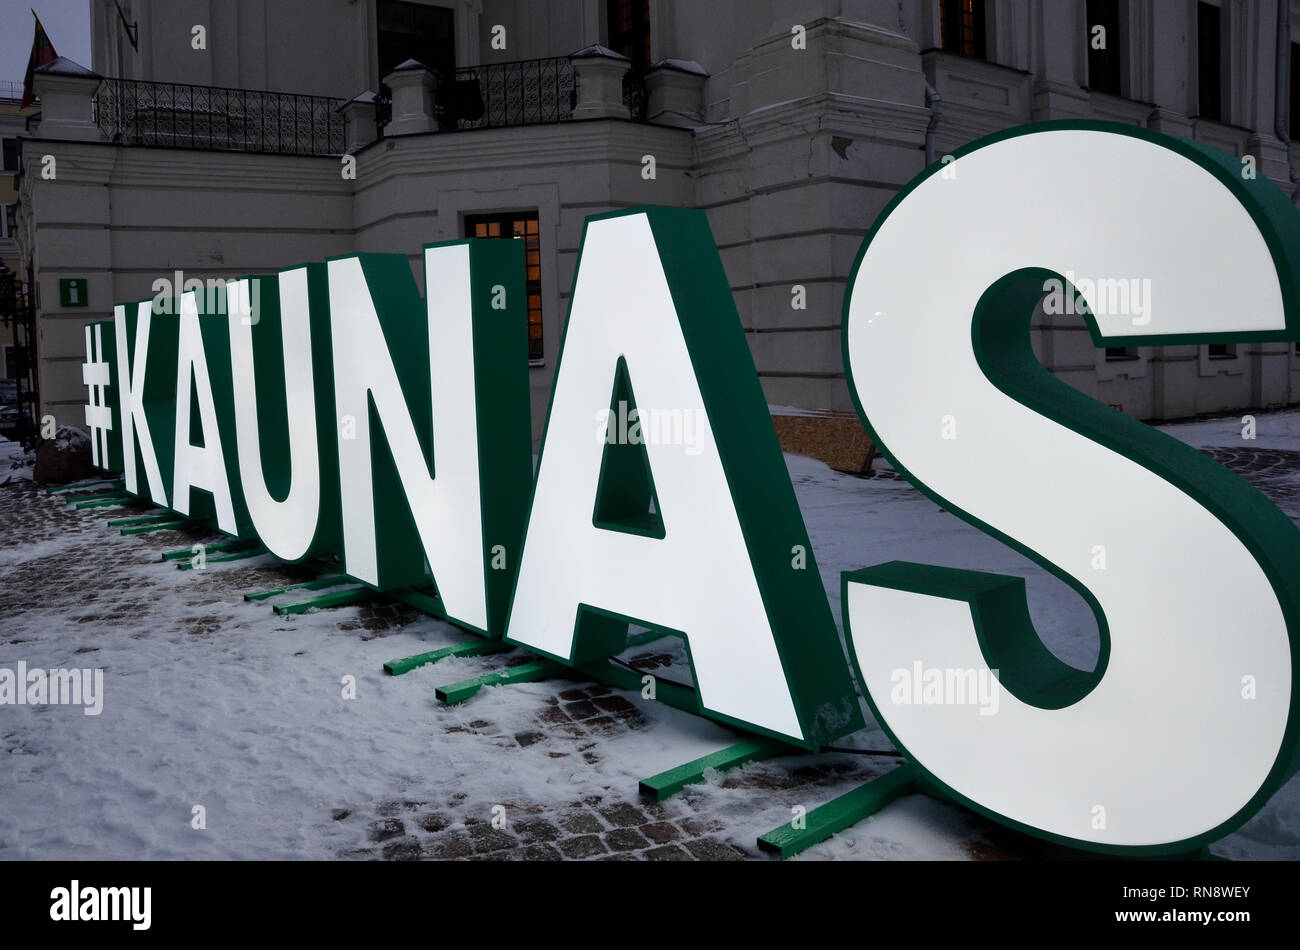 Kaunas sign, Town Hall Square, Old Town, Kaunas, Lithuania, December 2018 Stock Photo